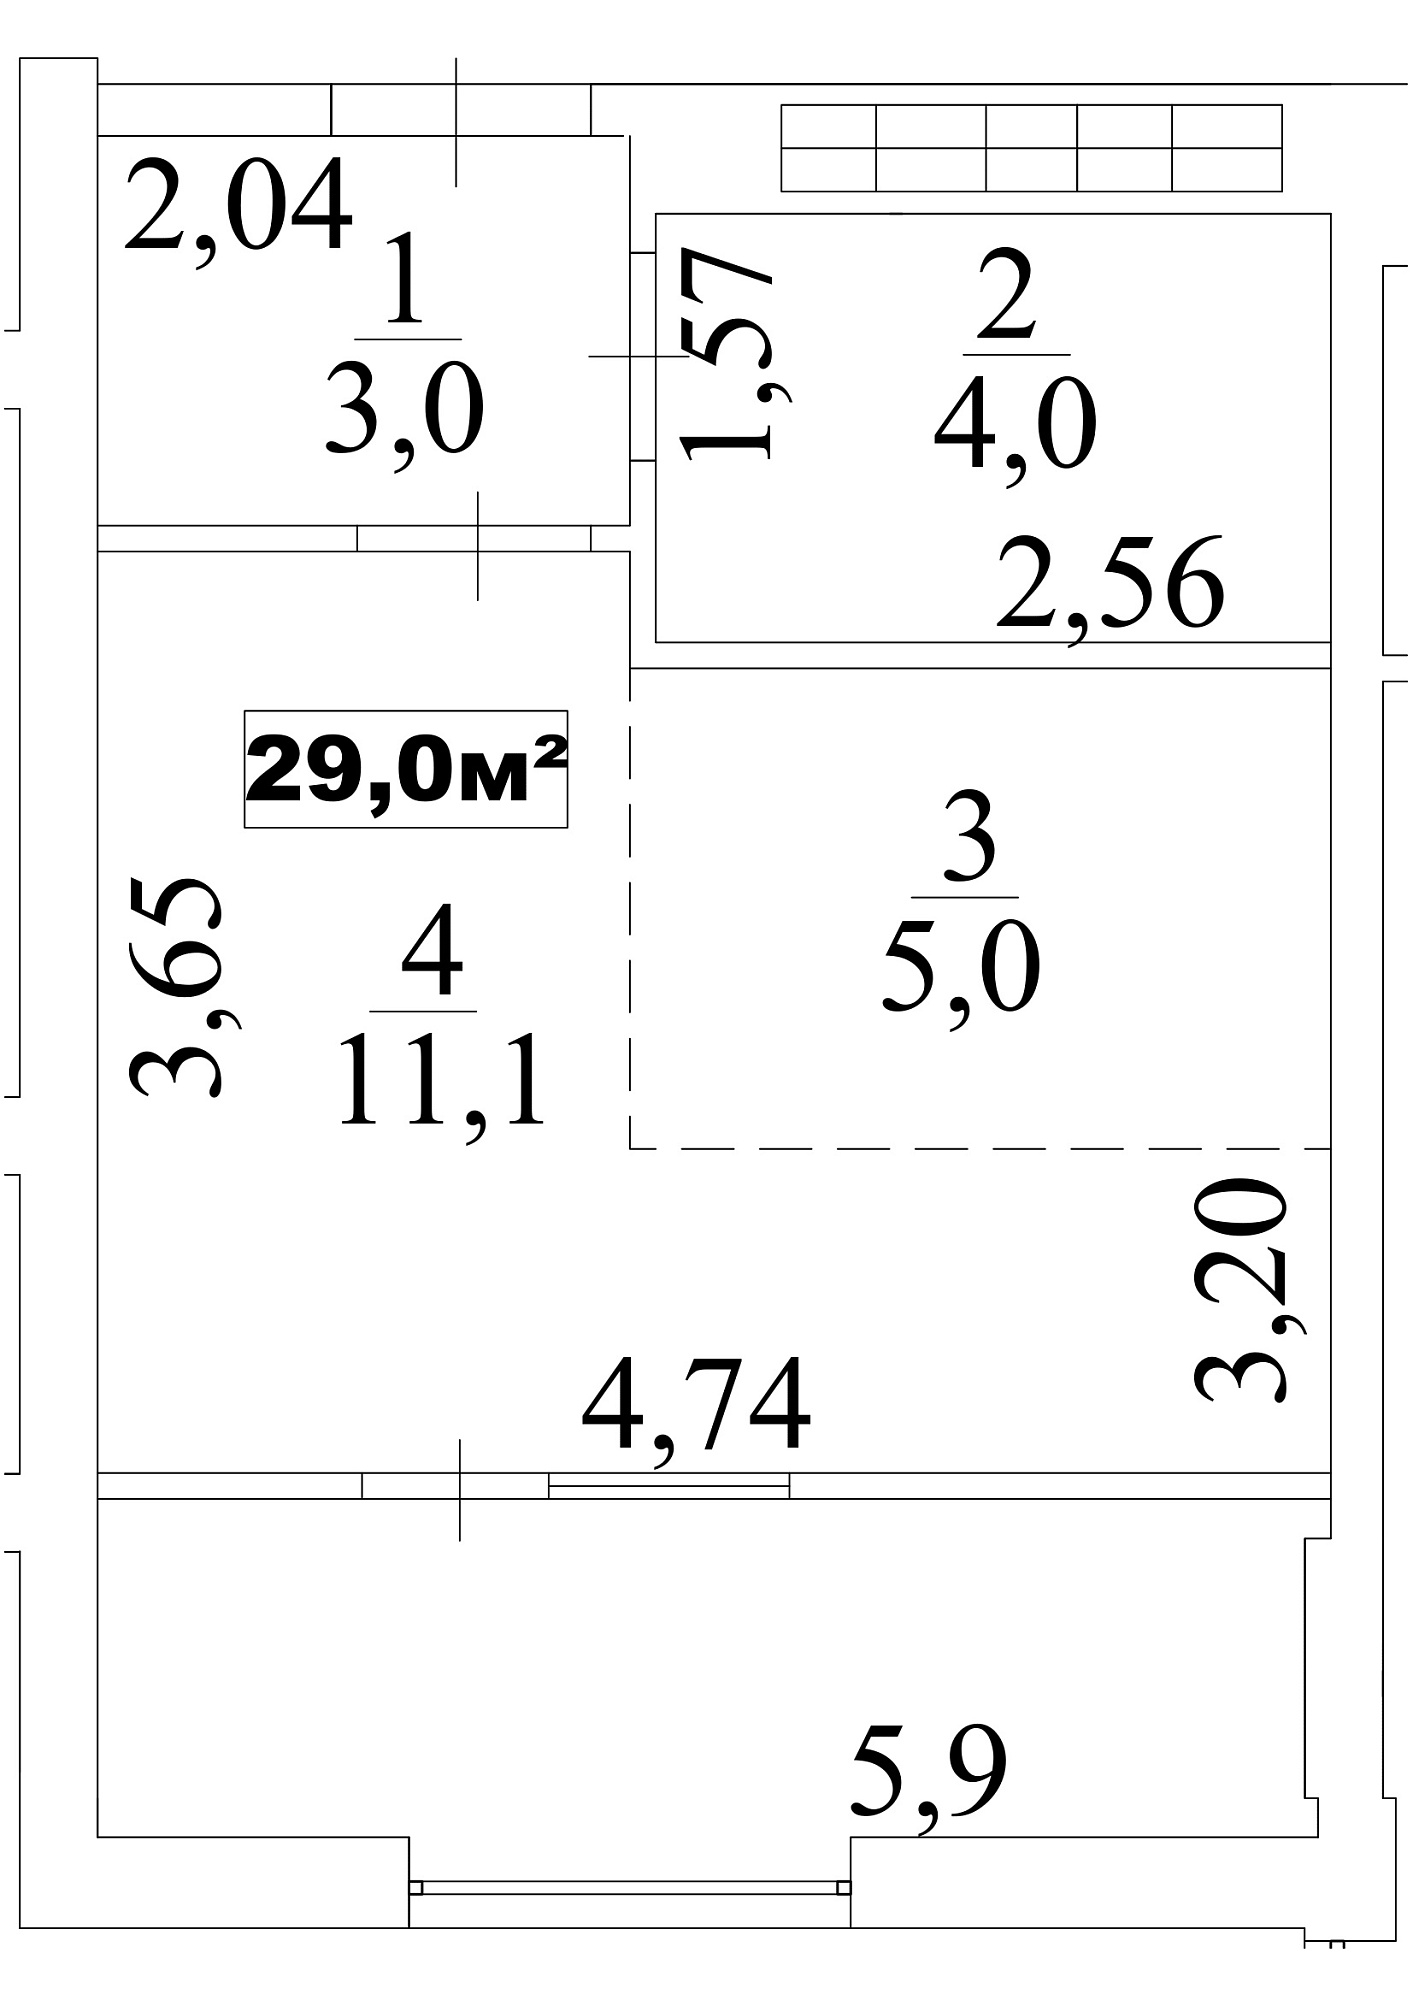 Планировка Smart-квартира площей 29м2, AB-10-02/00018.